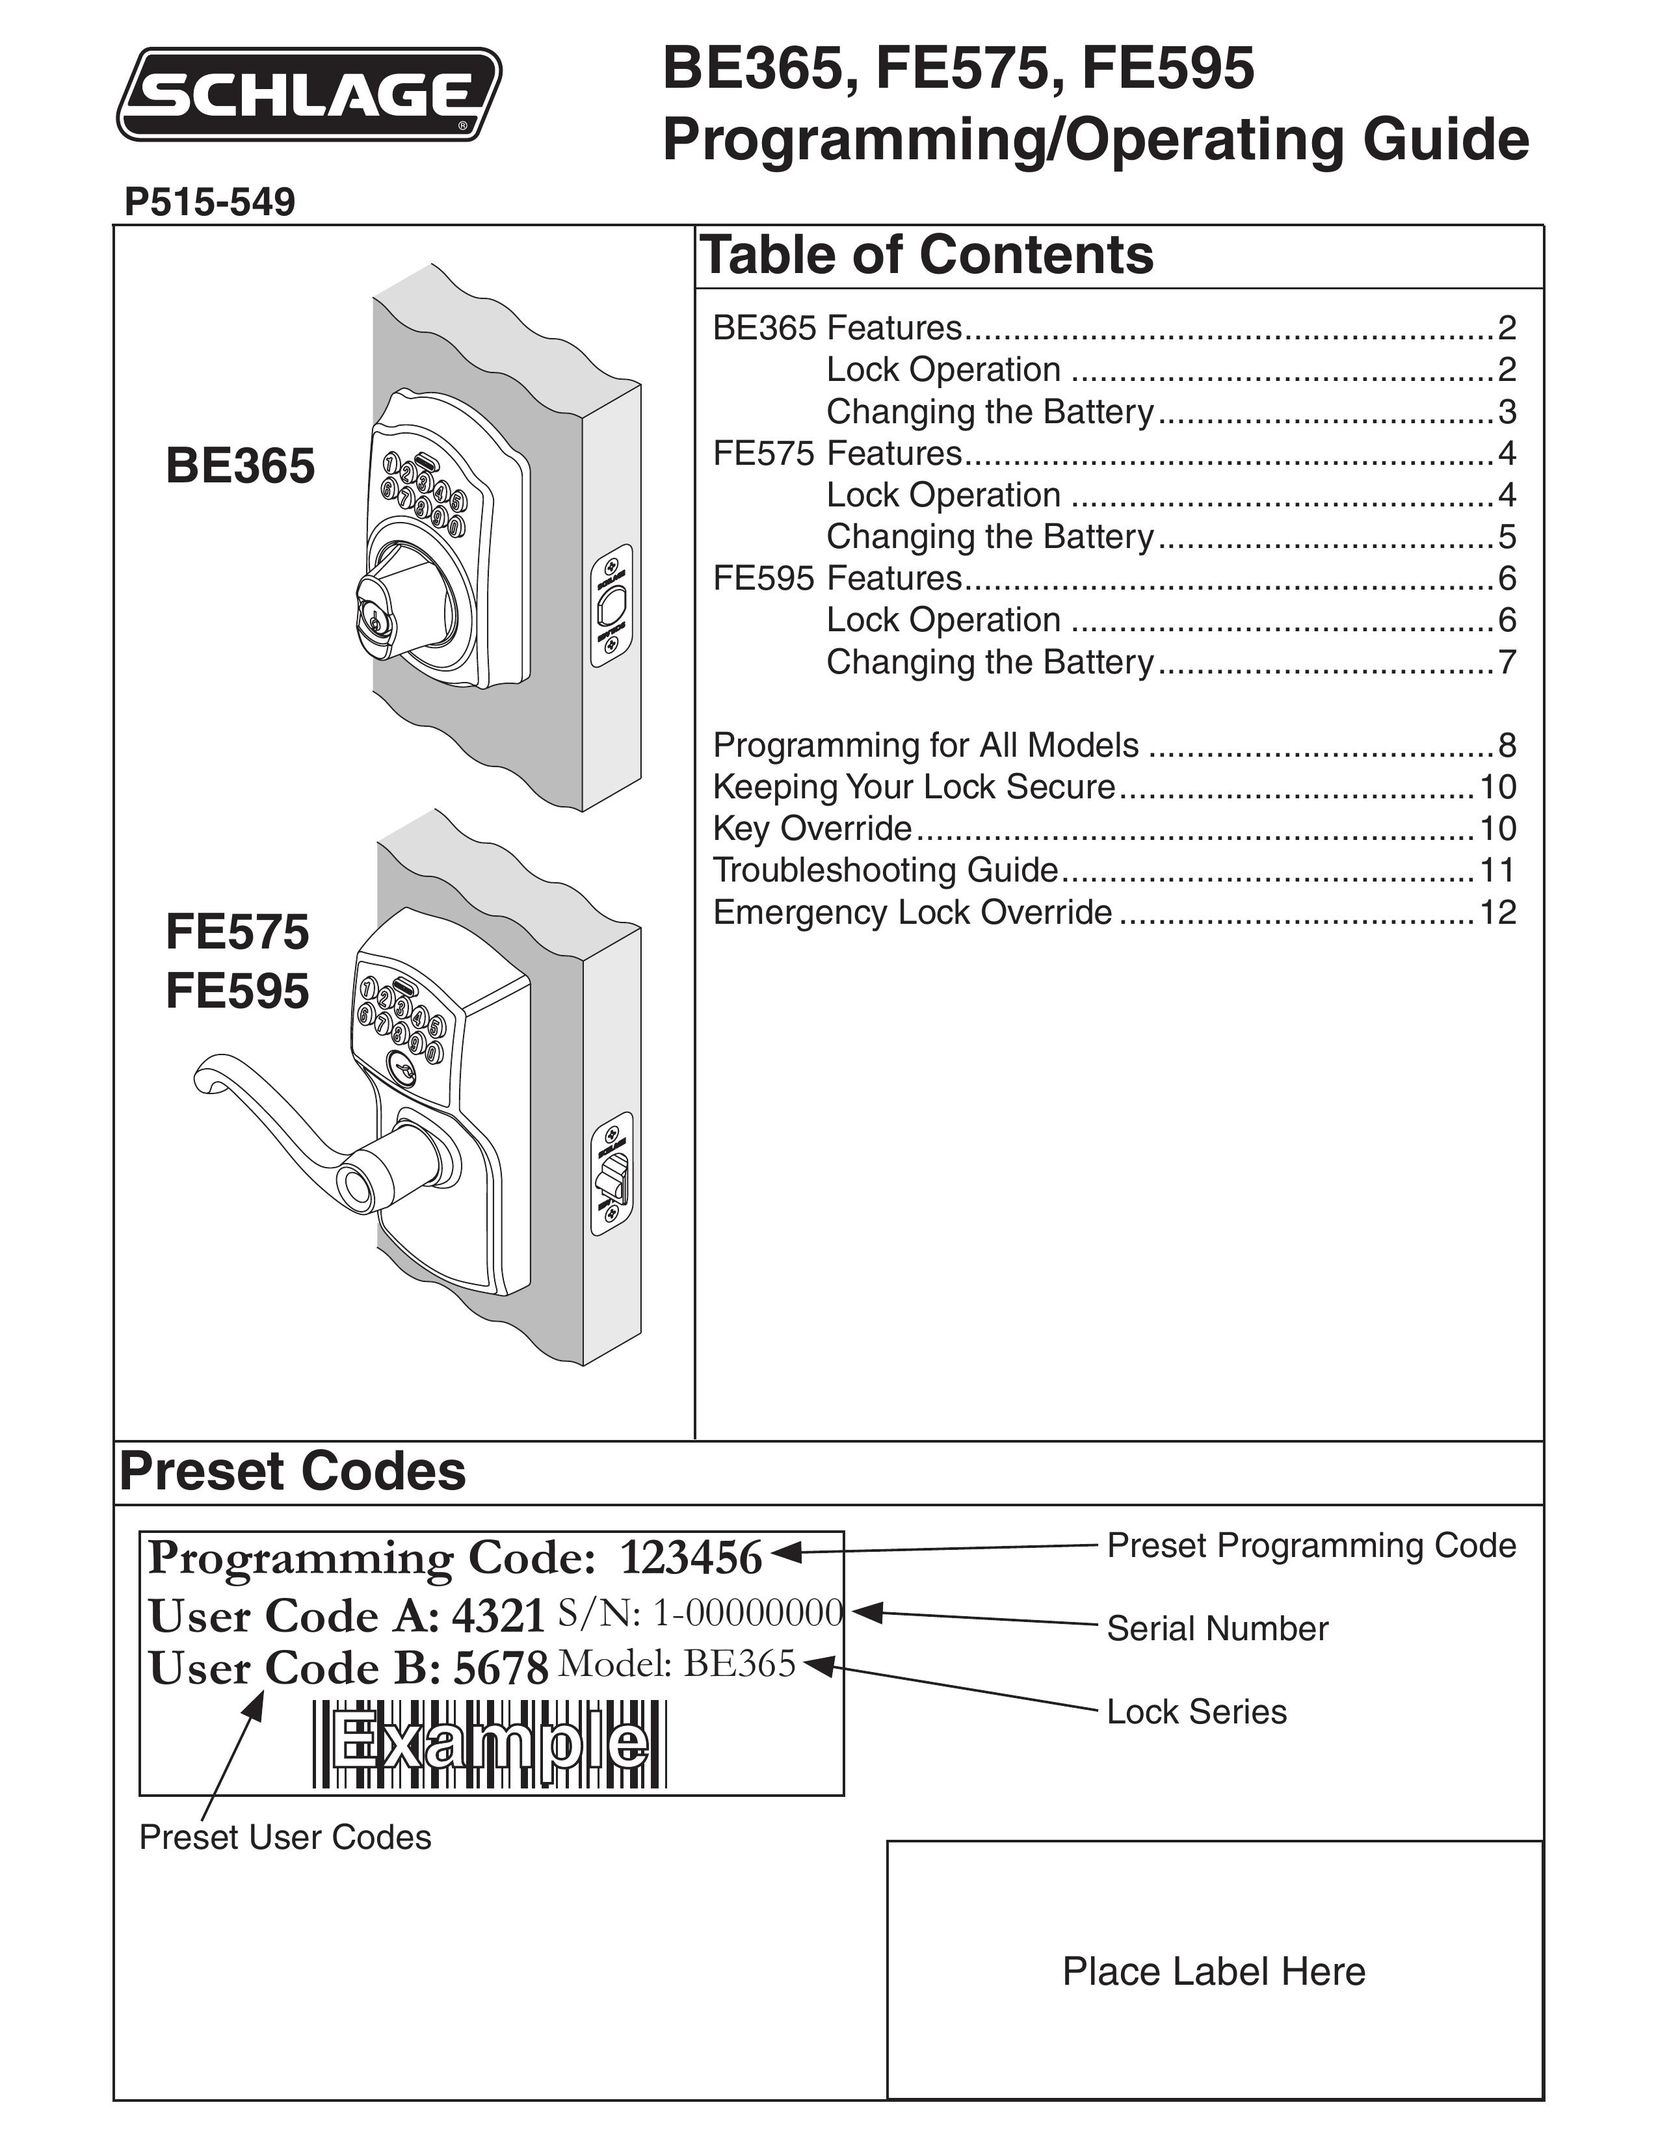 Schlage FE595 Pet Fence User Manual